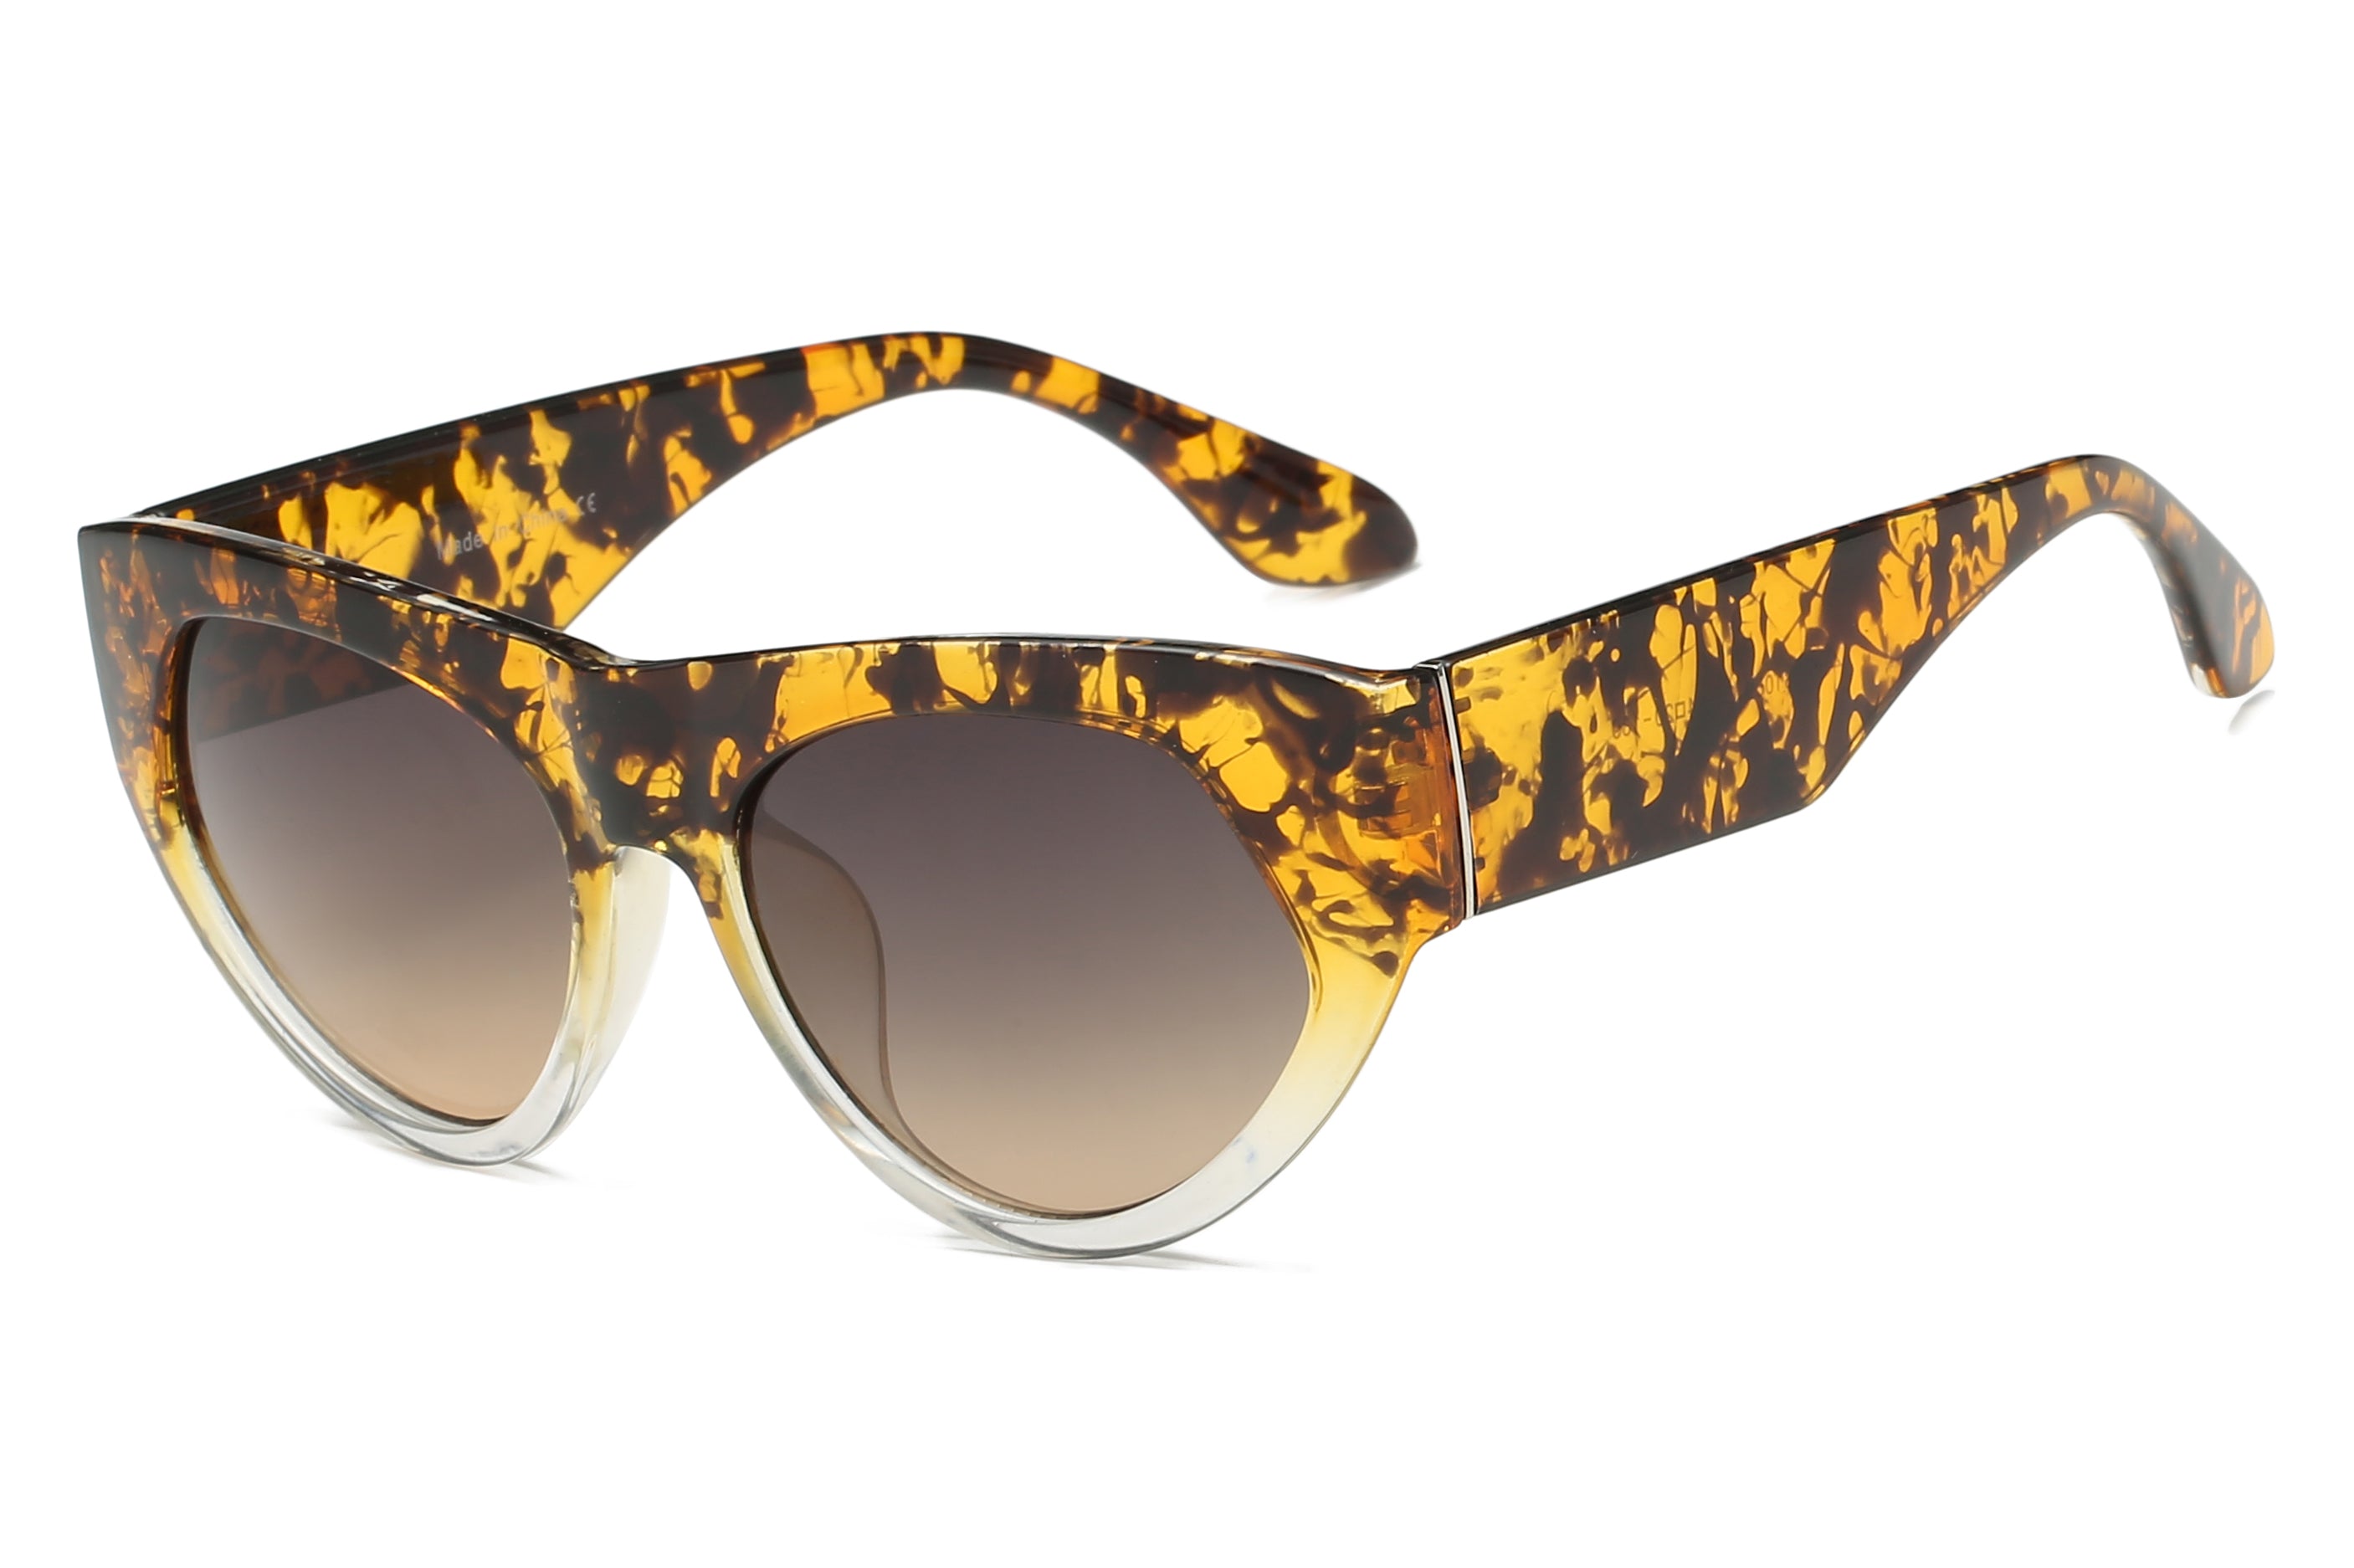 S1059 - Retro Round Thick Frame Cat Eye Fashion SUNGLASSES Tortoise